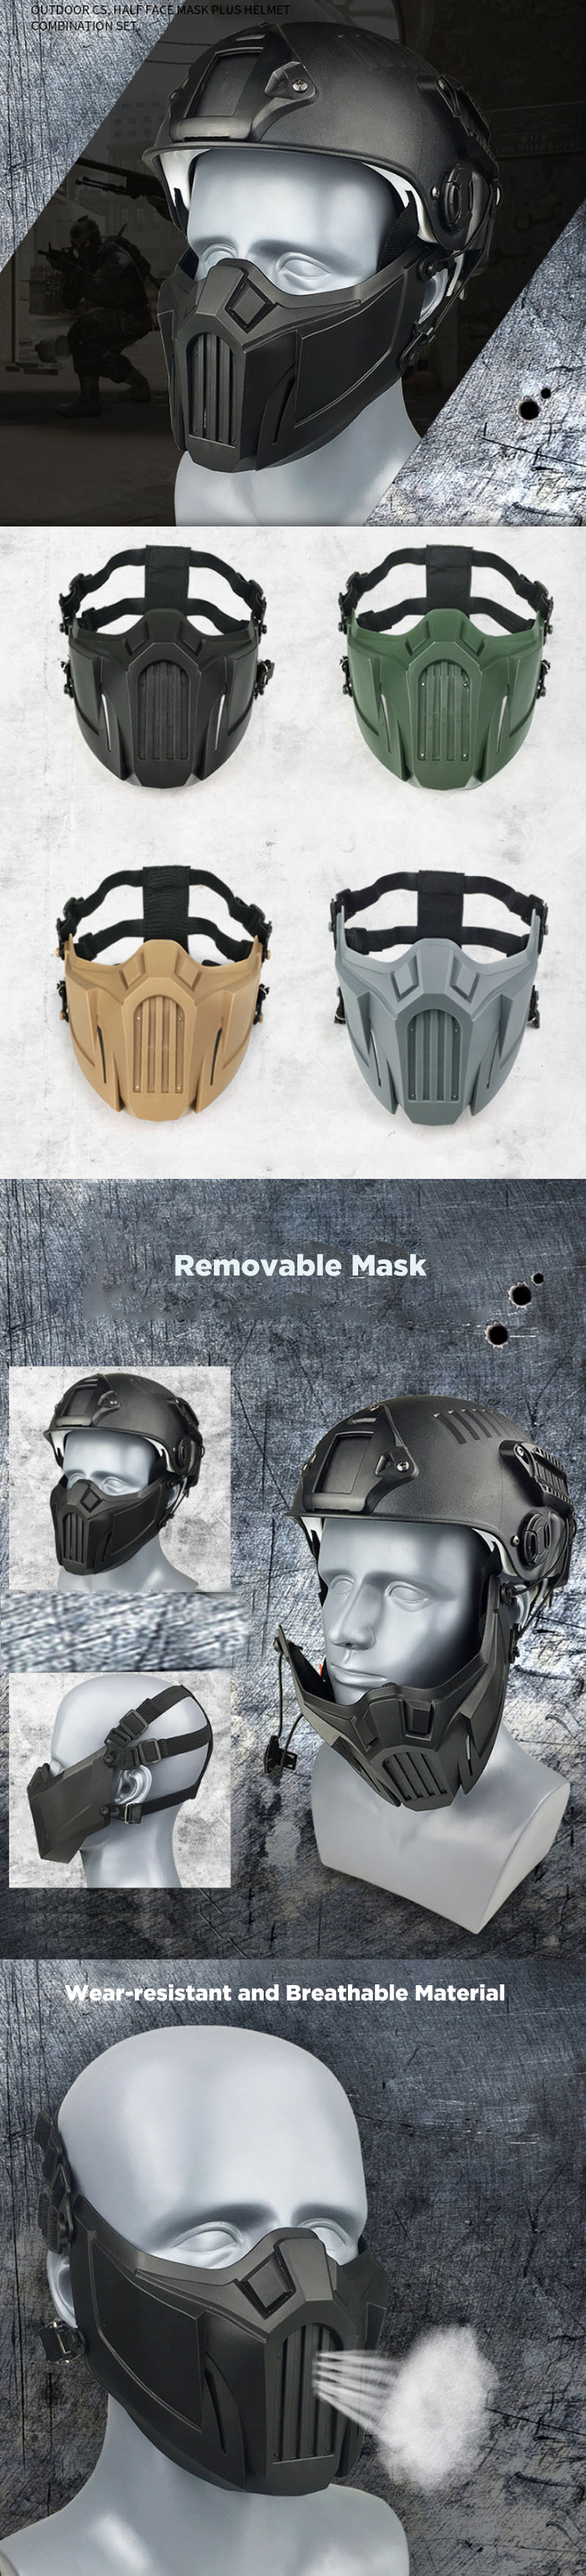 Anti-Dust-Breathable-CS-Mask-Safety-Protective-Tactical-Half-Face-Mask-Adjustable-Elastic-Bandage-Ma-1659307-1